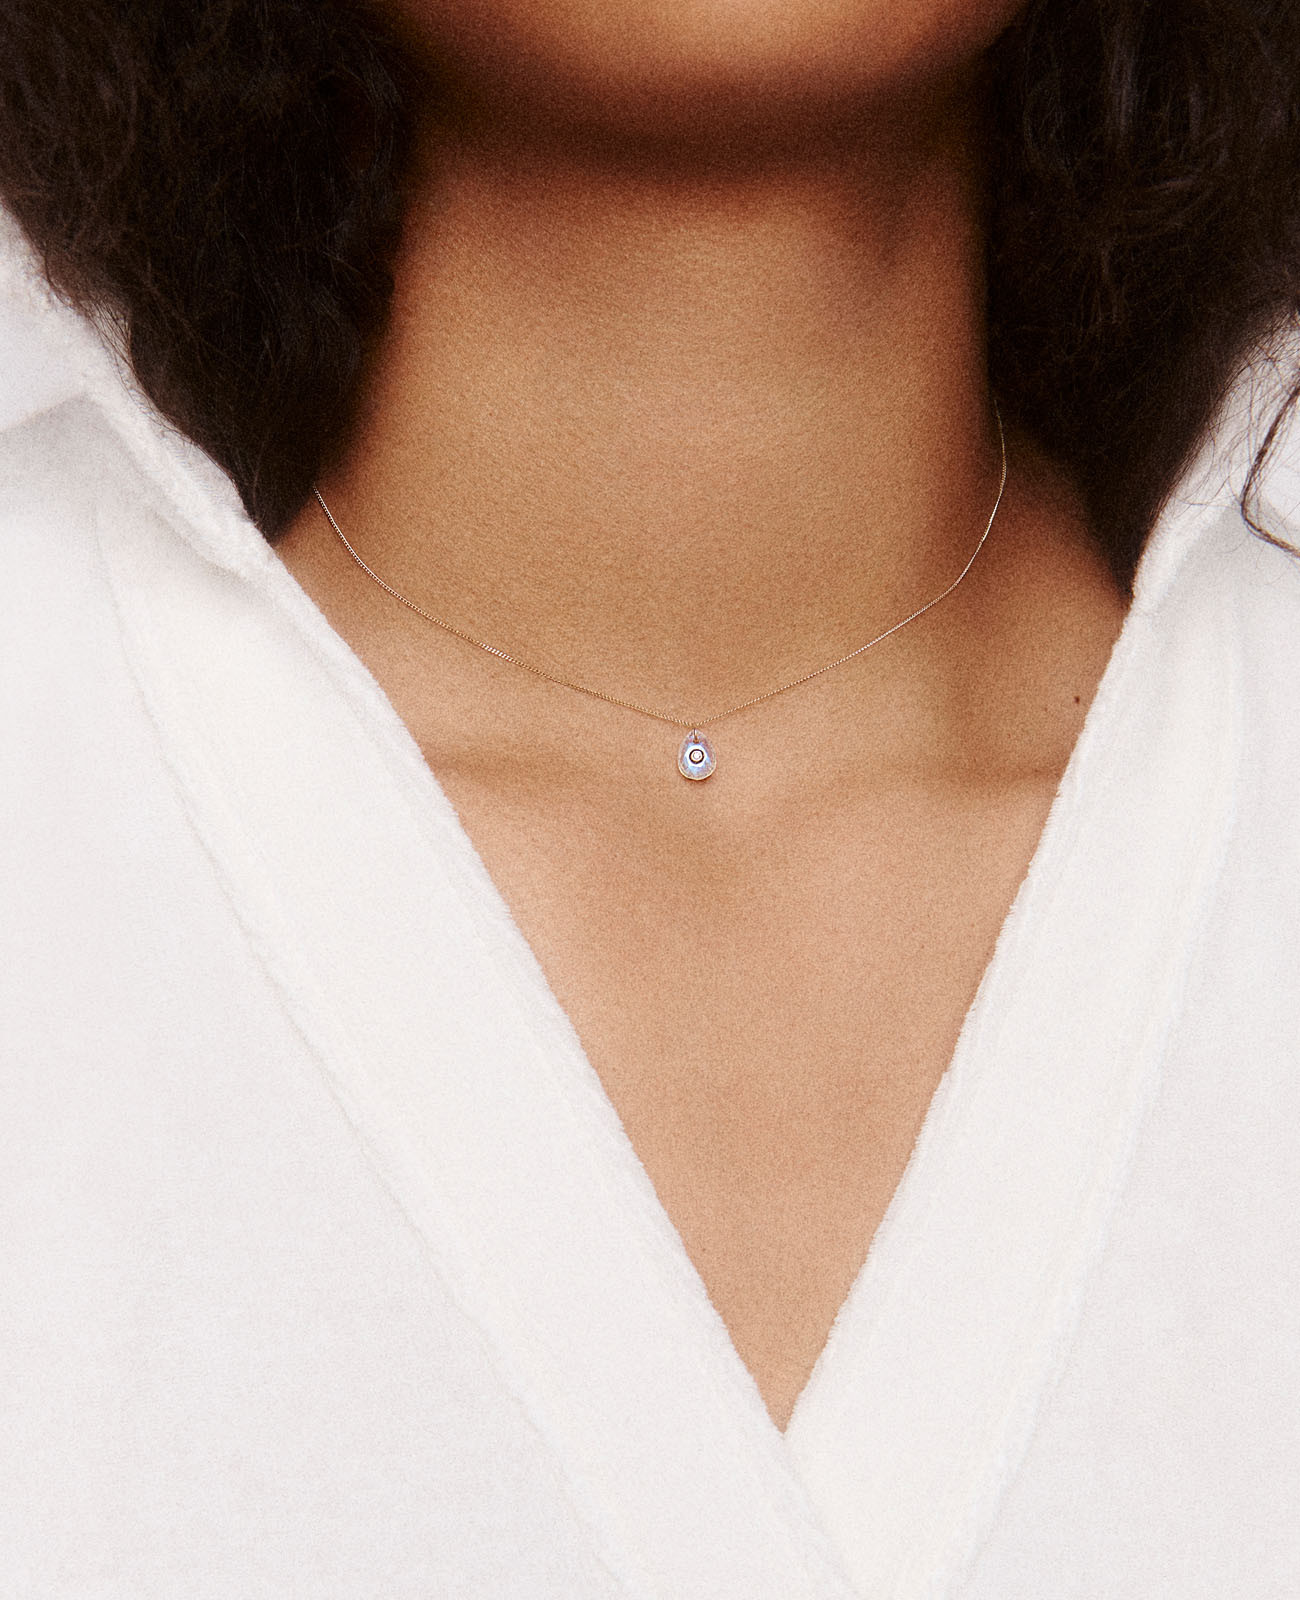 ORSO MOONSTONE necklace pascale monvoisin jewelry paris